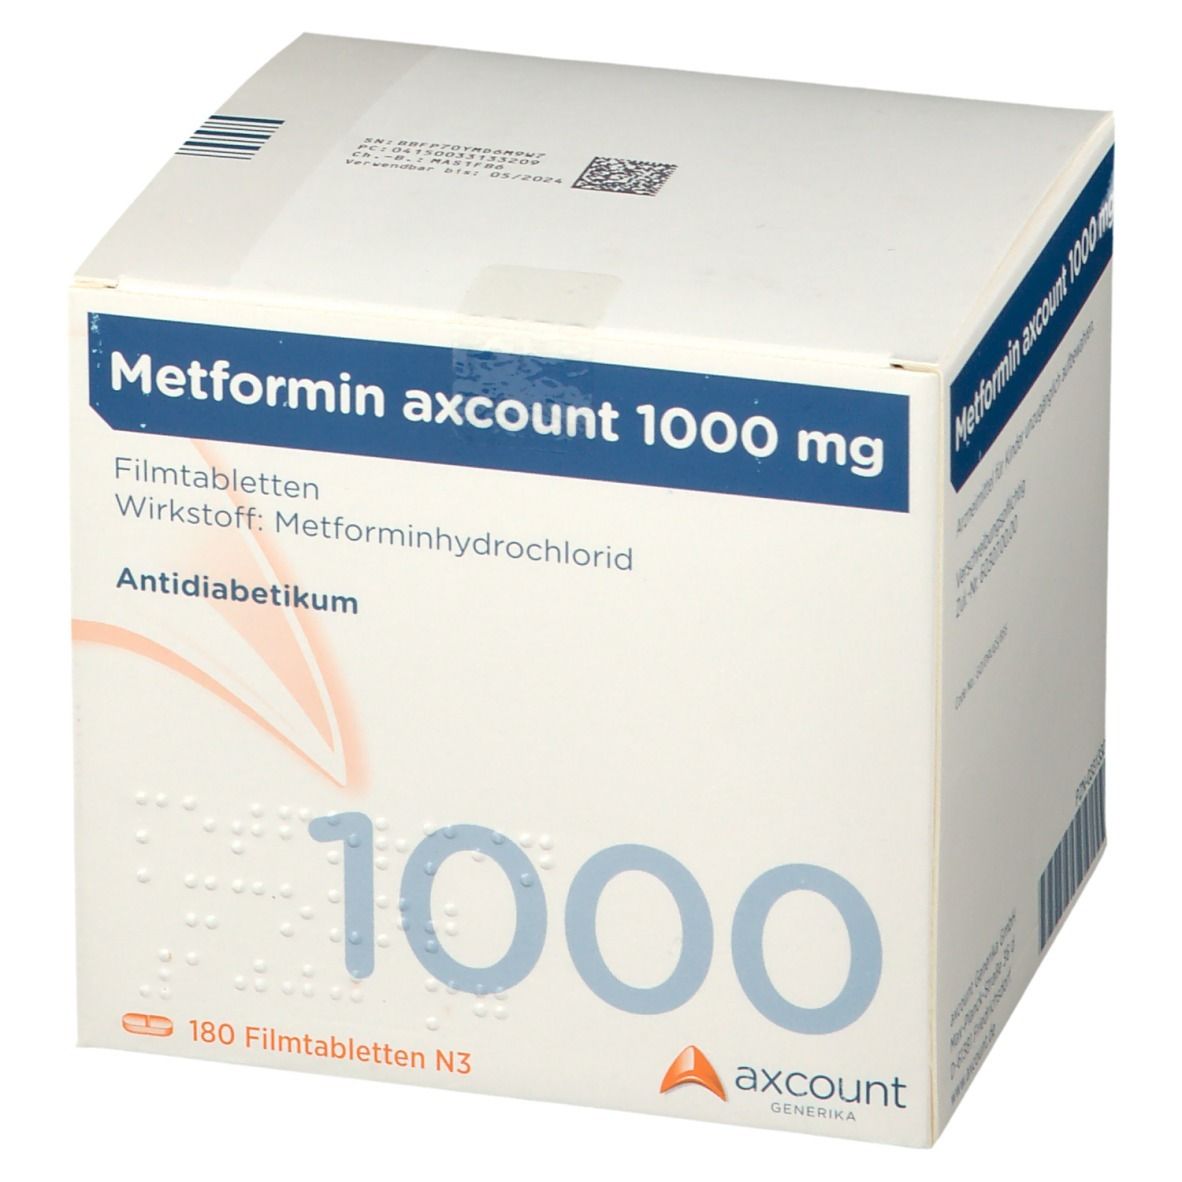 Metformin axcount 1000 mg